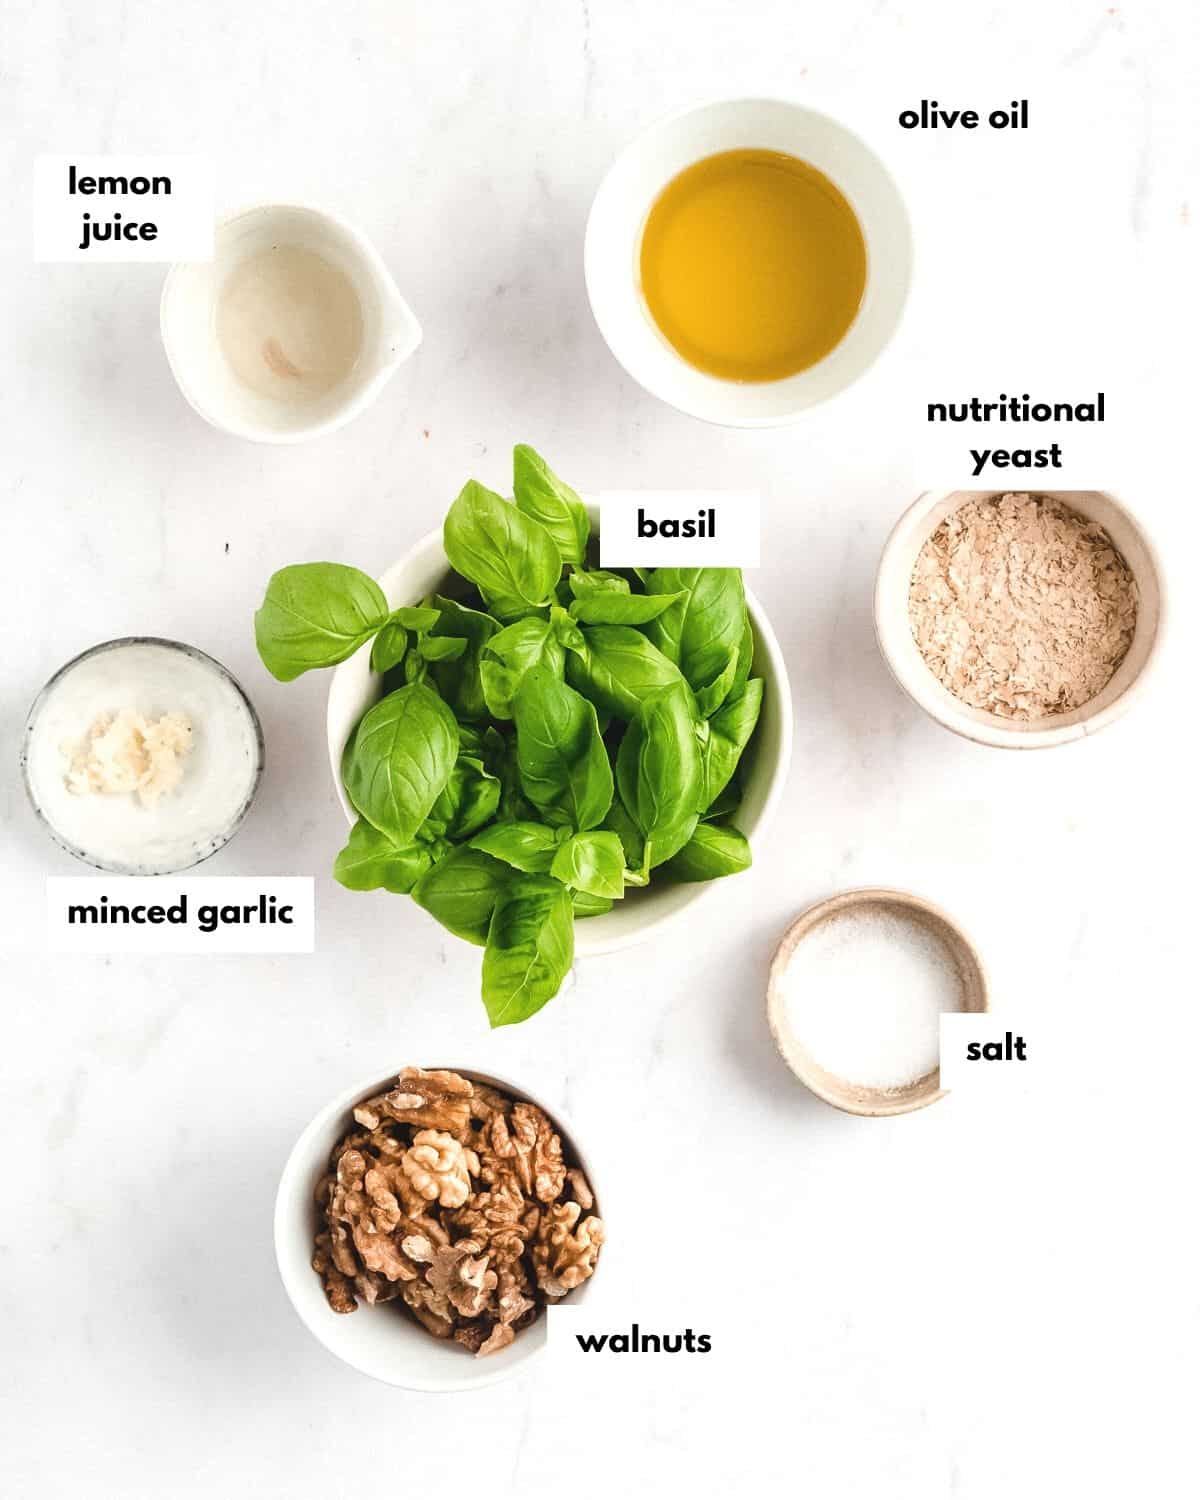 all ingredients needed to make vegan walnut pesto.